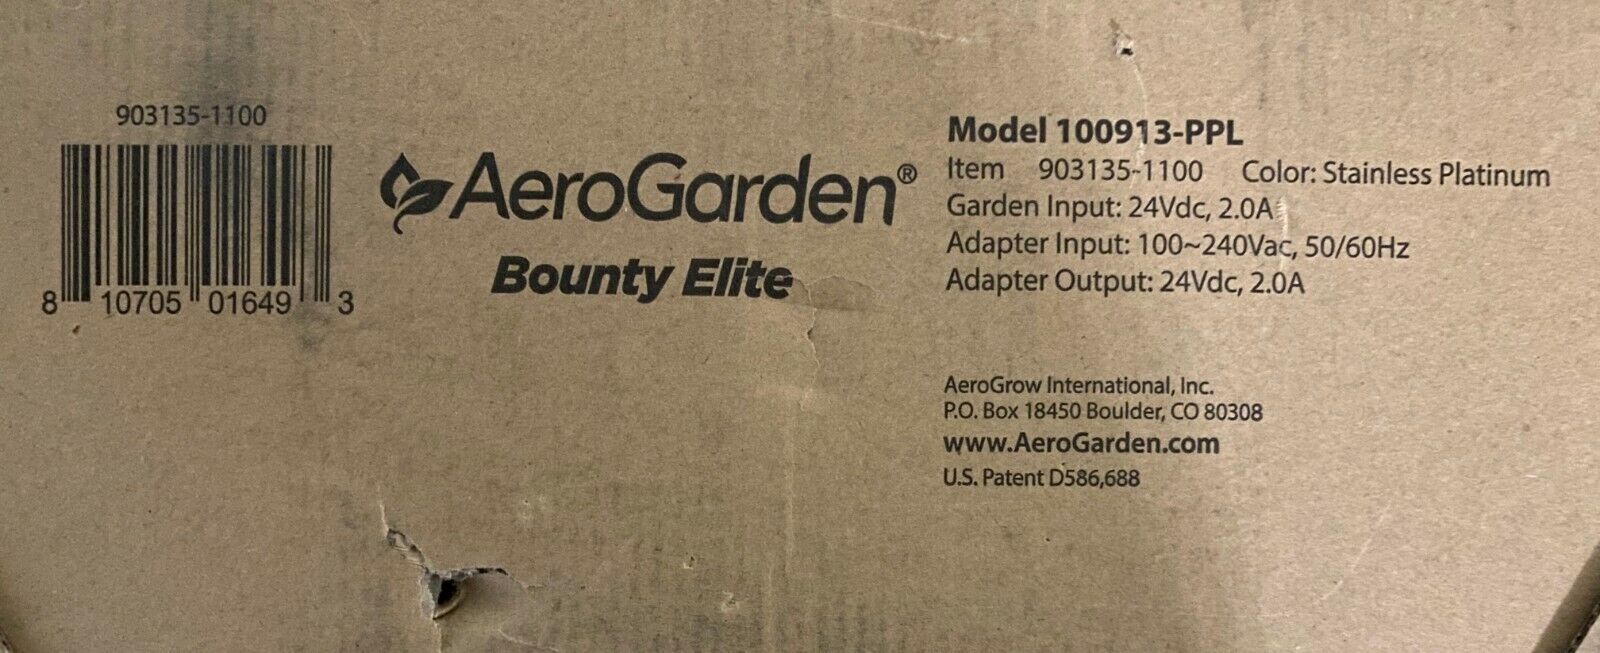 AeroGarden 903135-1100 Bounty Elite-Platinum Indoor Garden